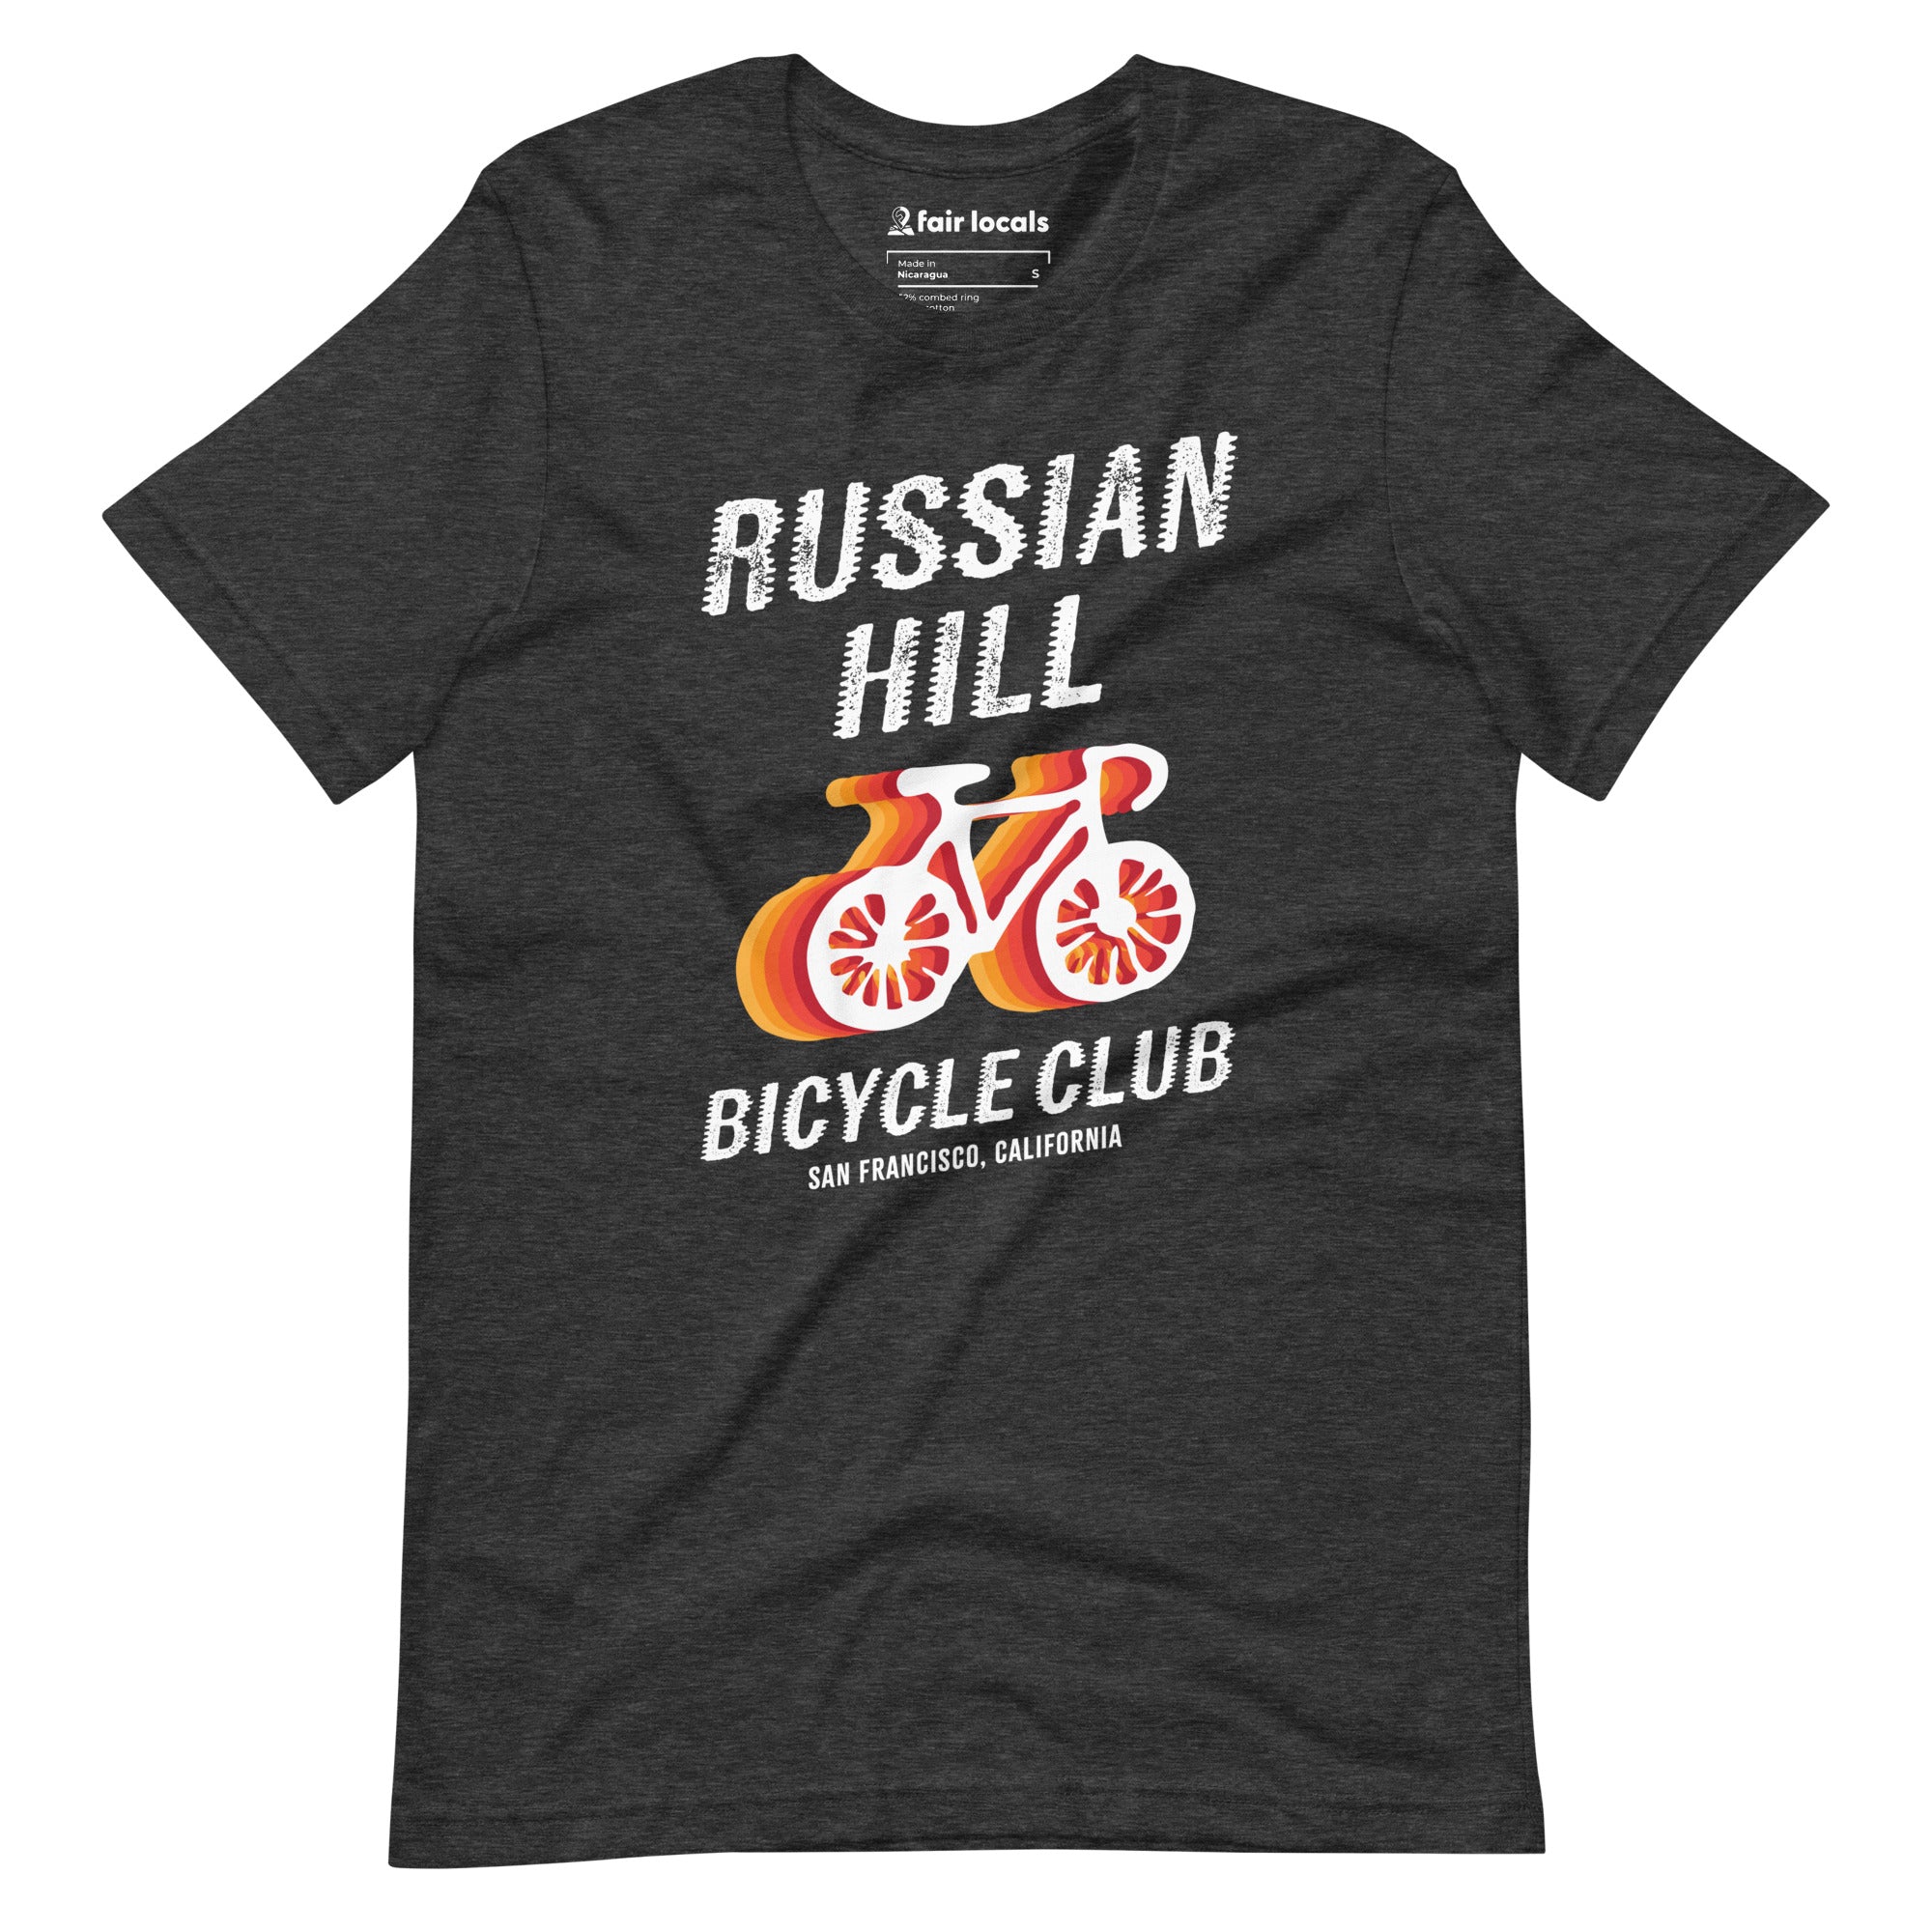 Bicycle Club T-Shirt - Russian Hill | San Francisco, CA